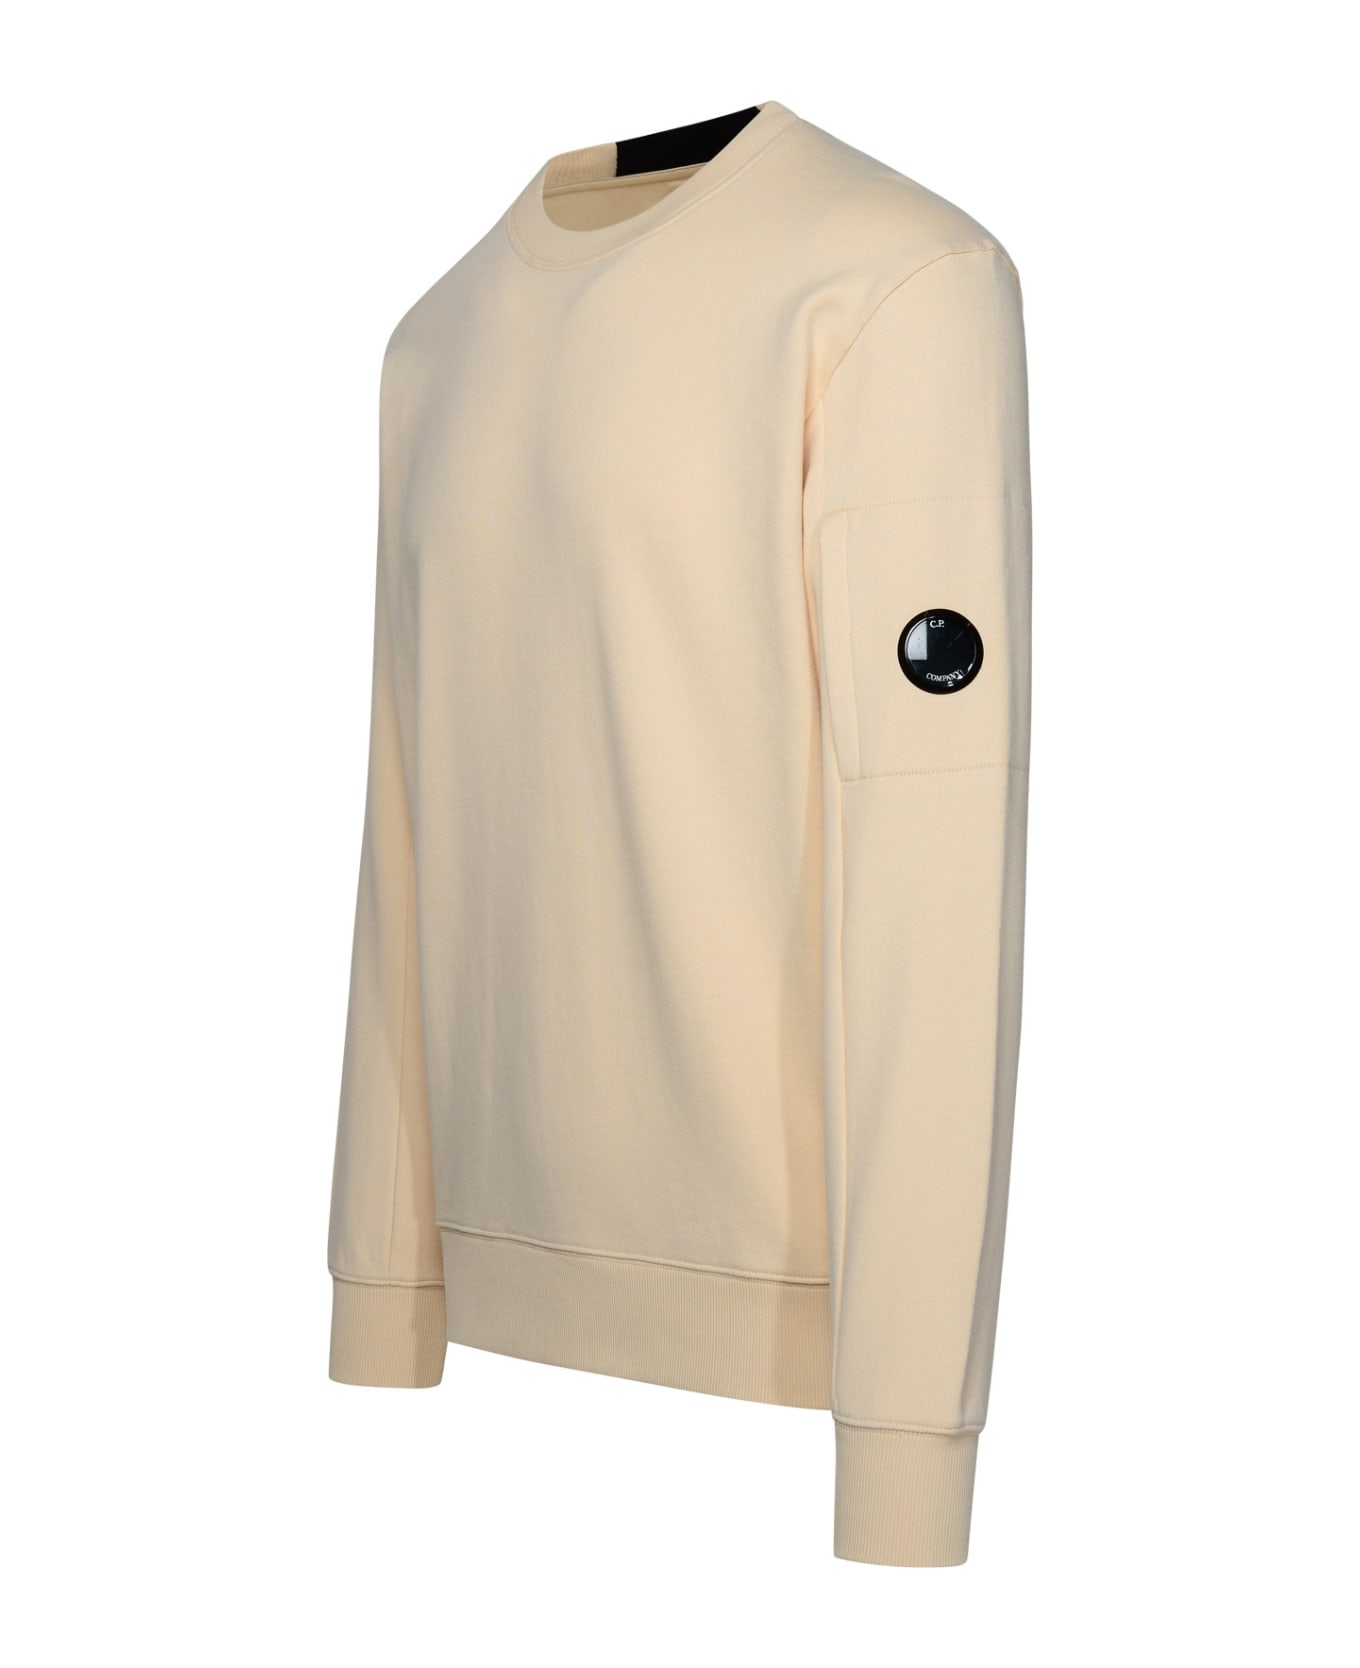 C.P. Company 'diagonal Raised Fleece' Beige Cotton Sweatshirt - Crema フリース